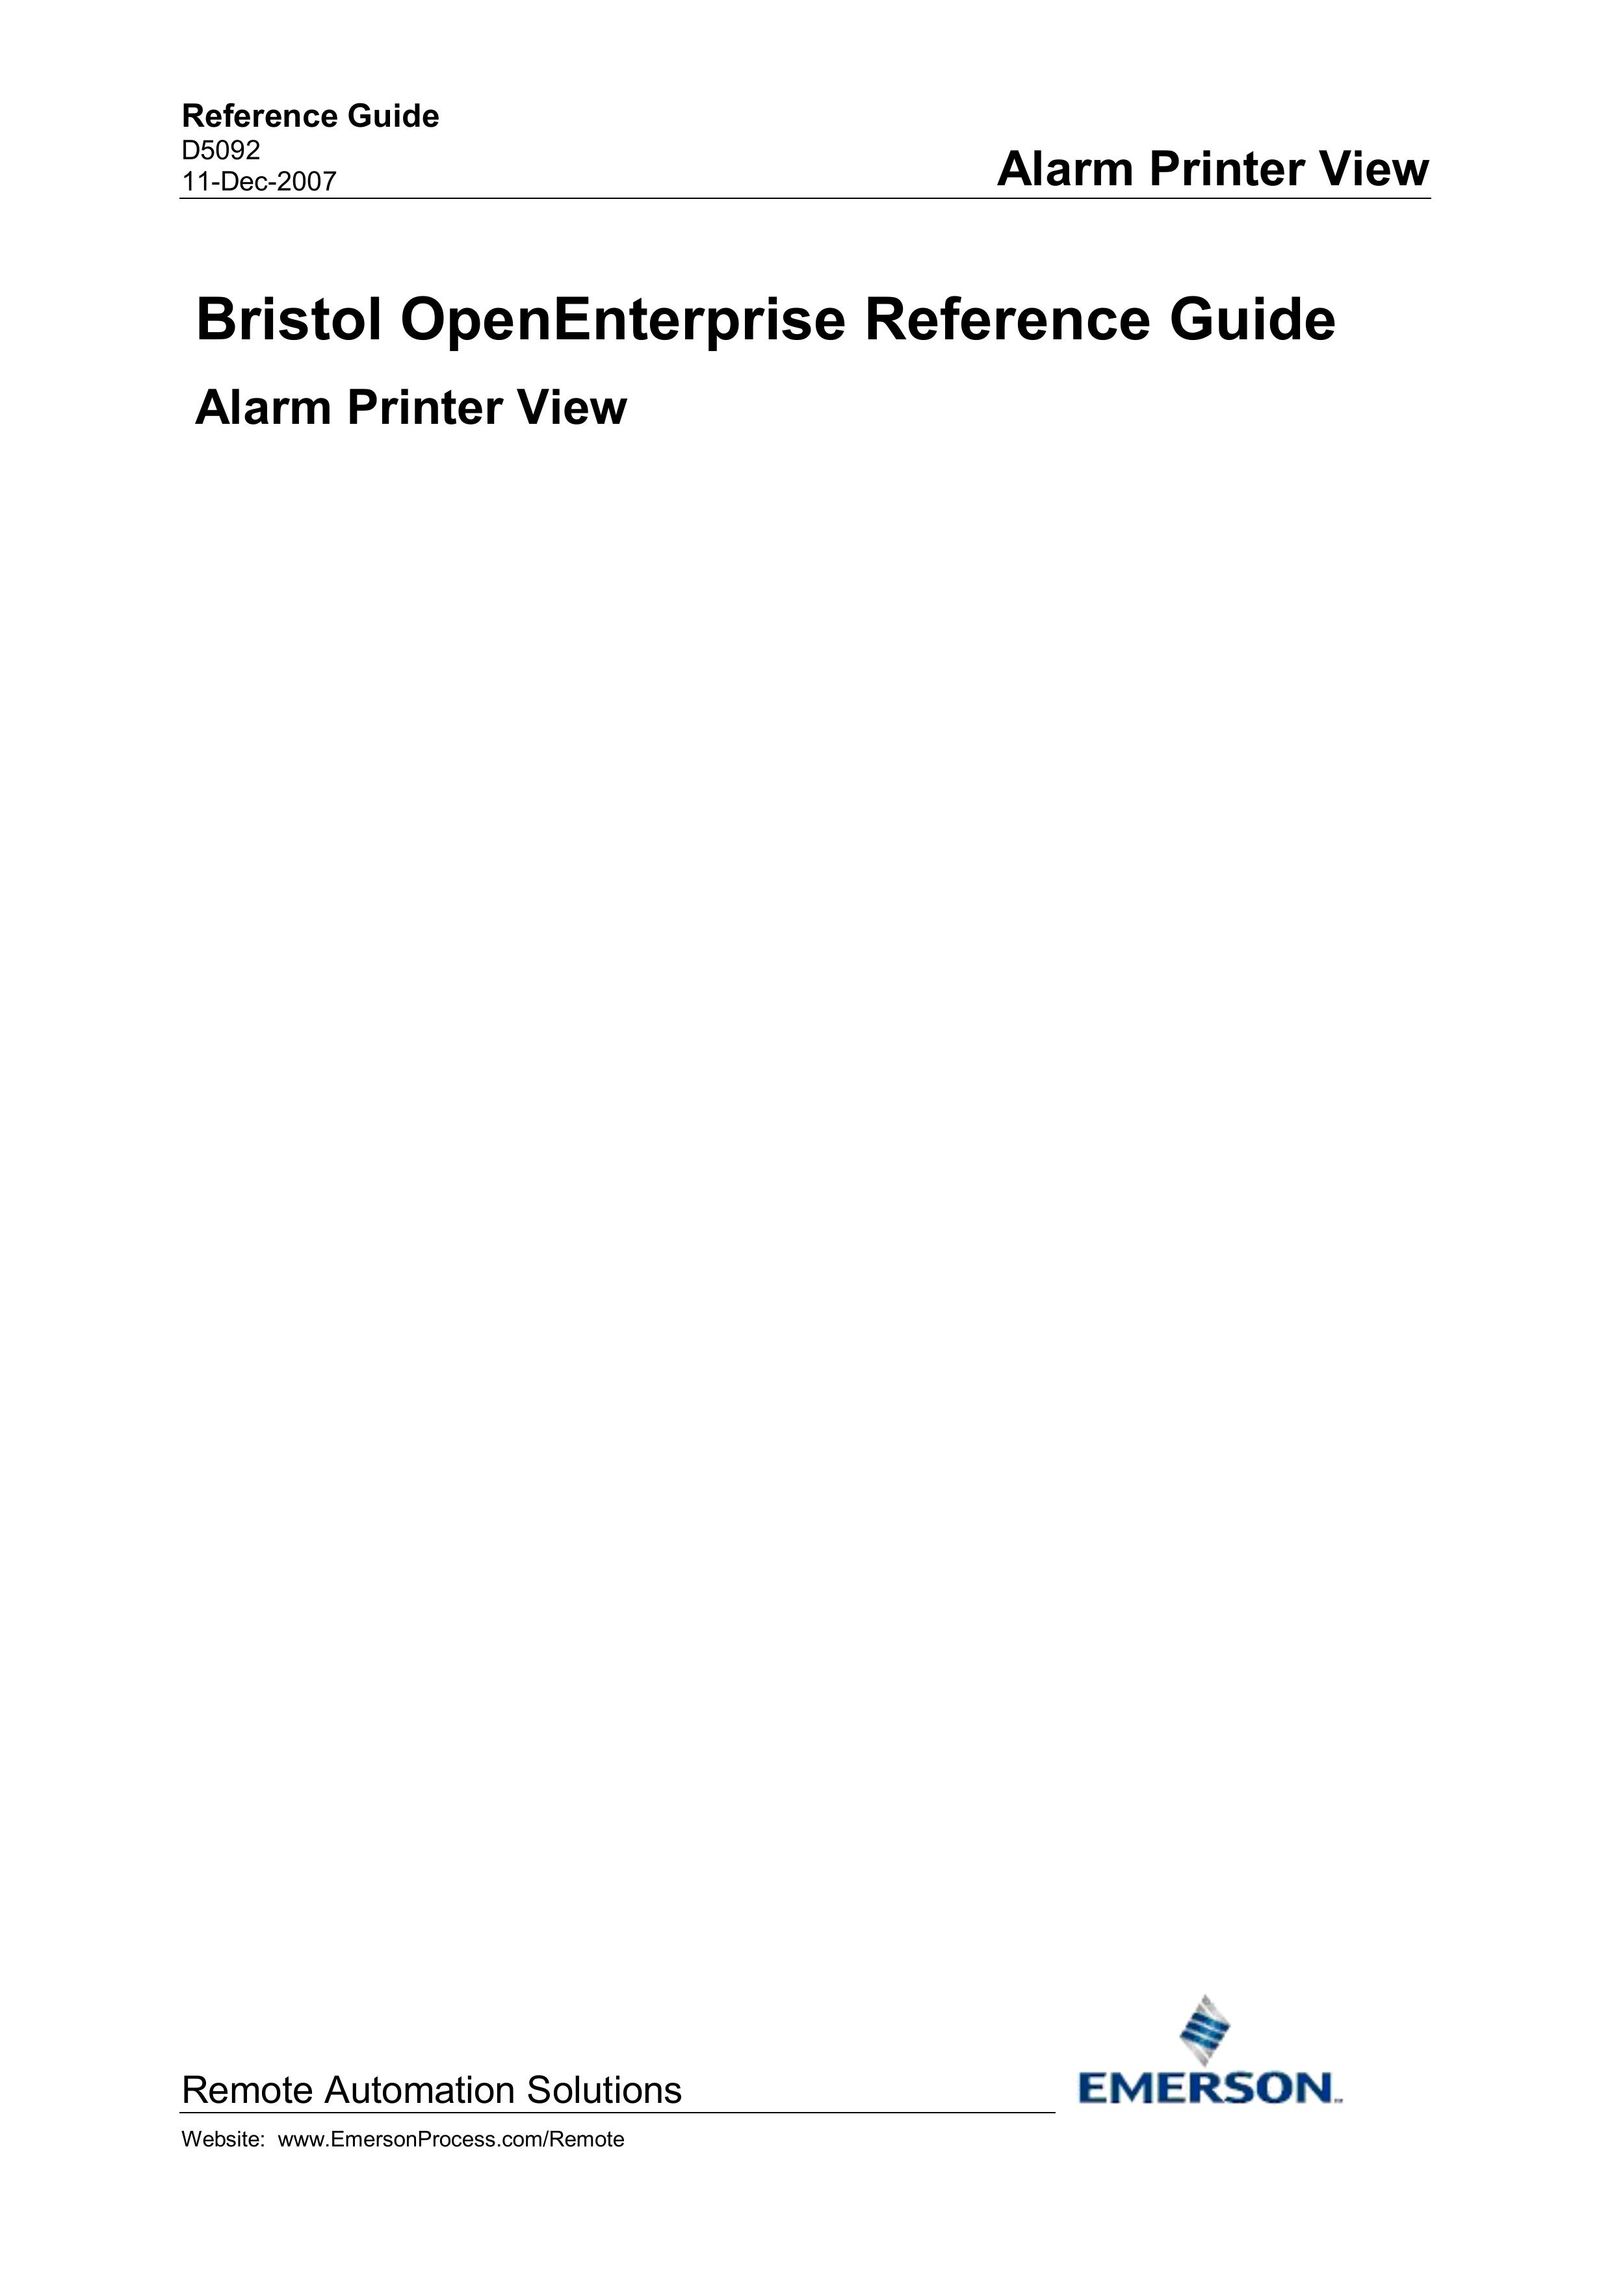 Emerson Process Management D5092 Printer User Manual